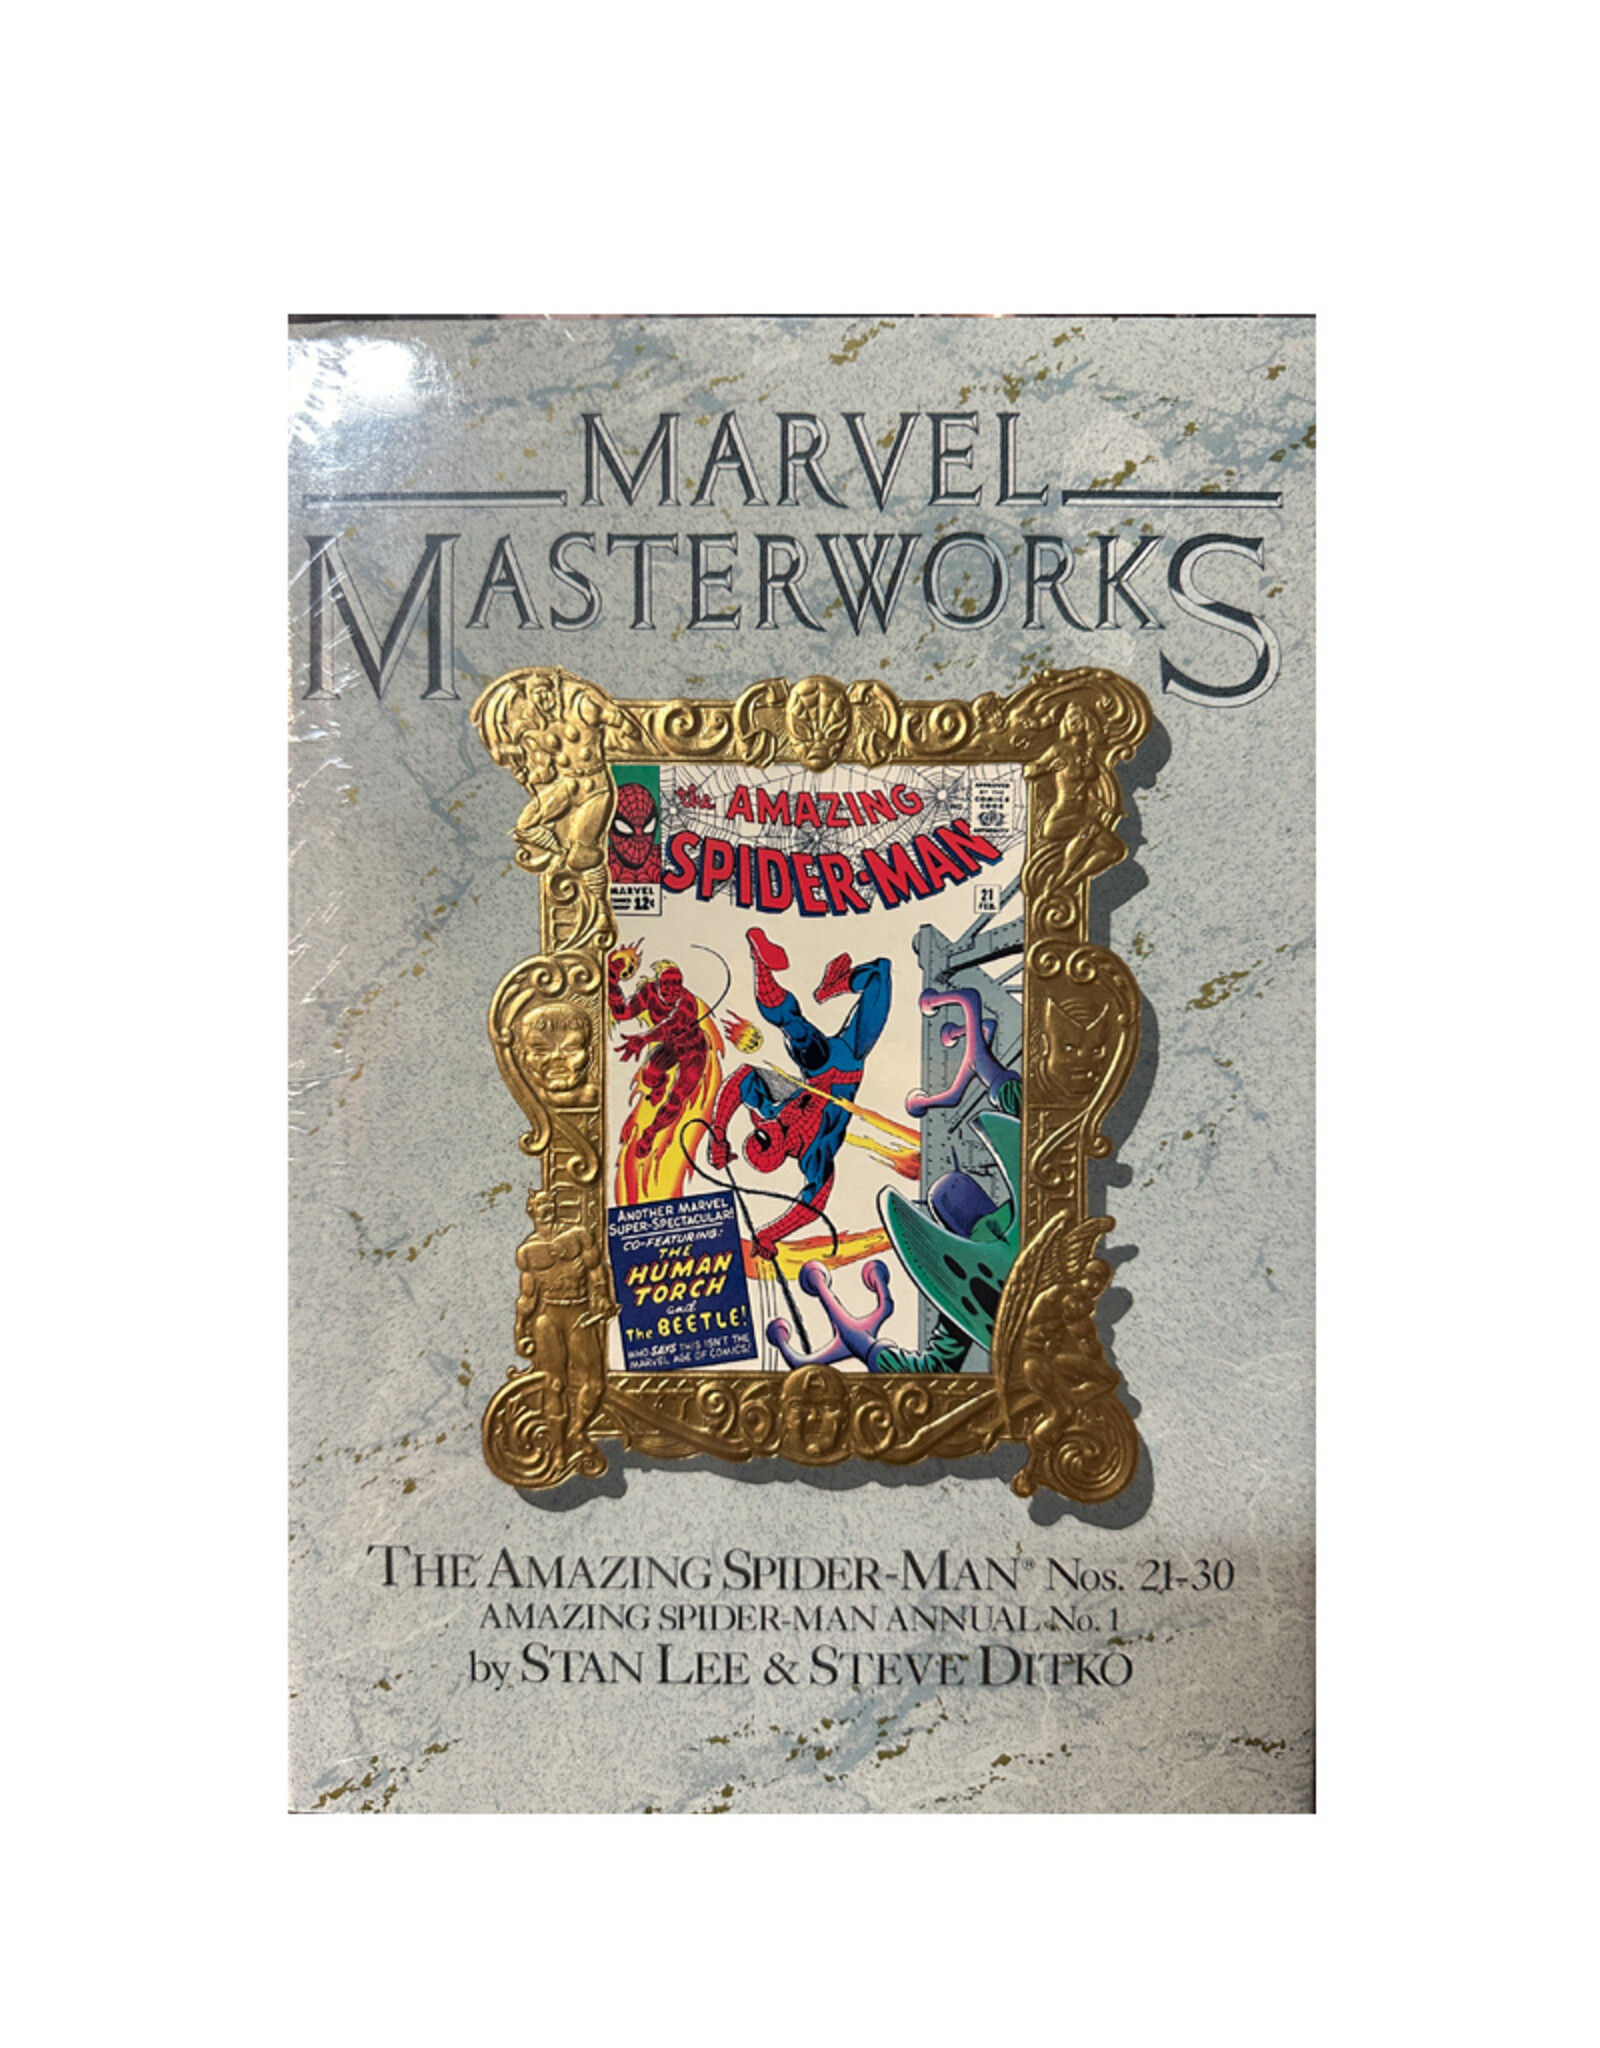 Marvel Comics Marvel Masterworks #10 HC